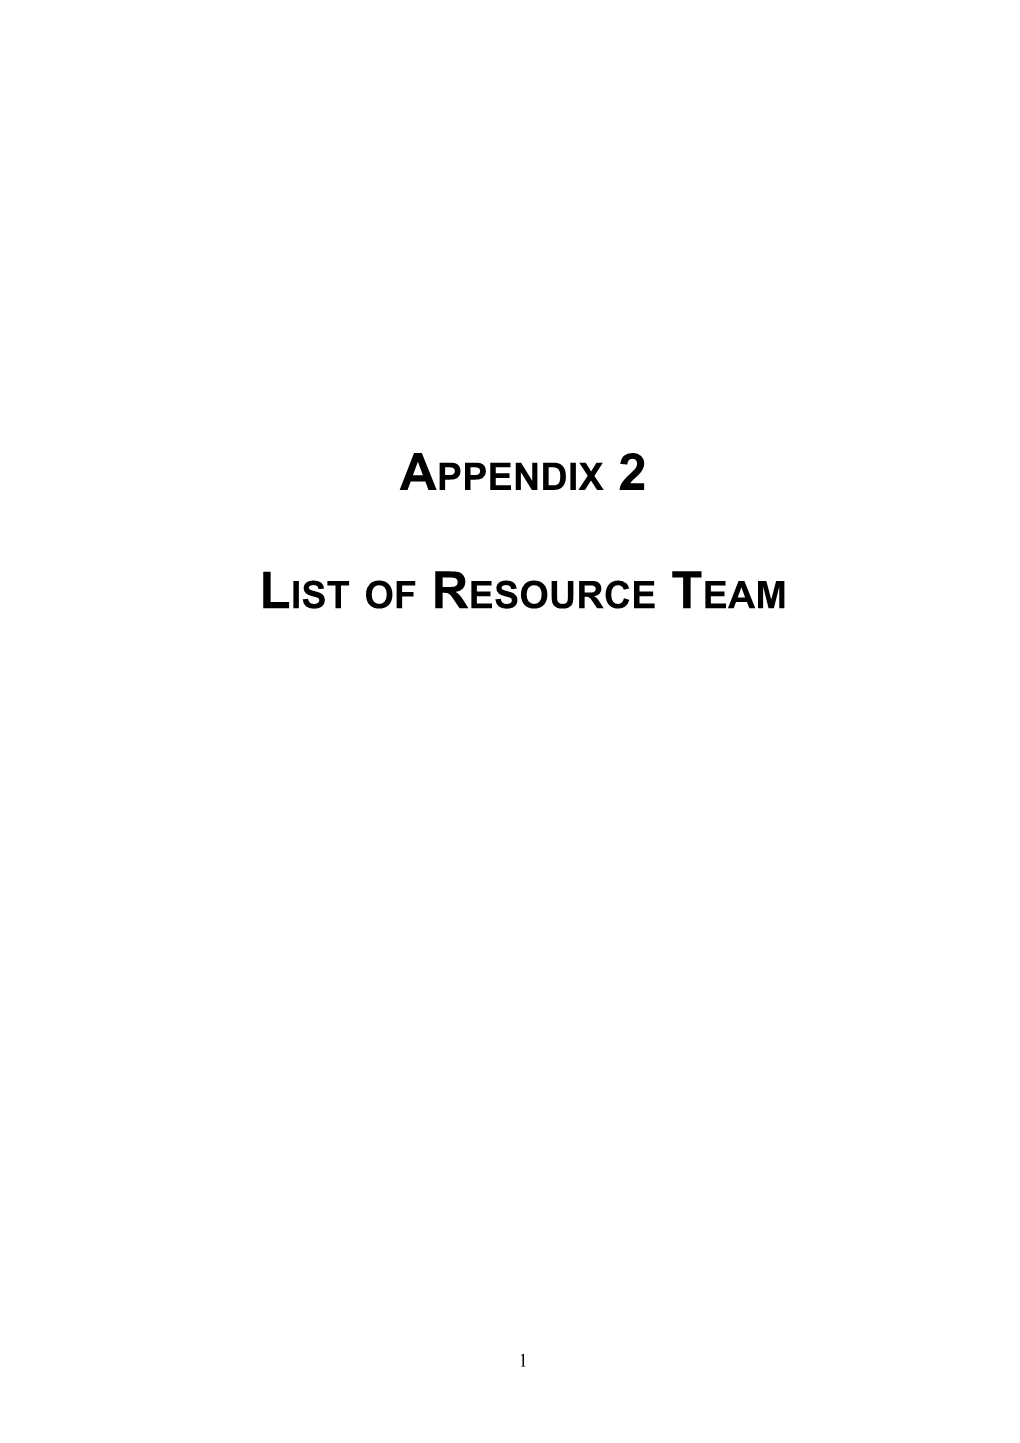 List of Resource Team